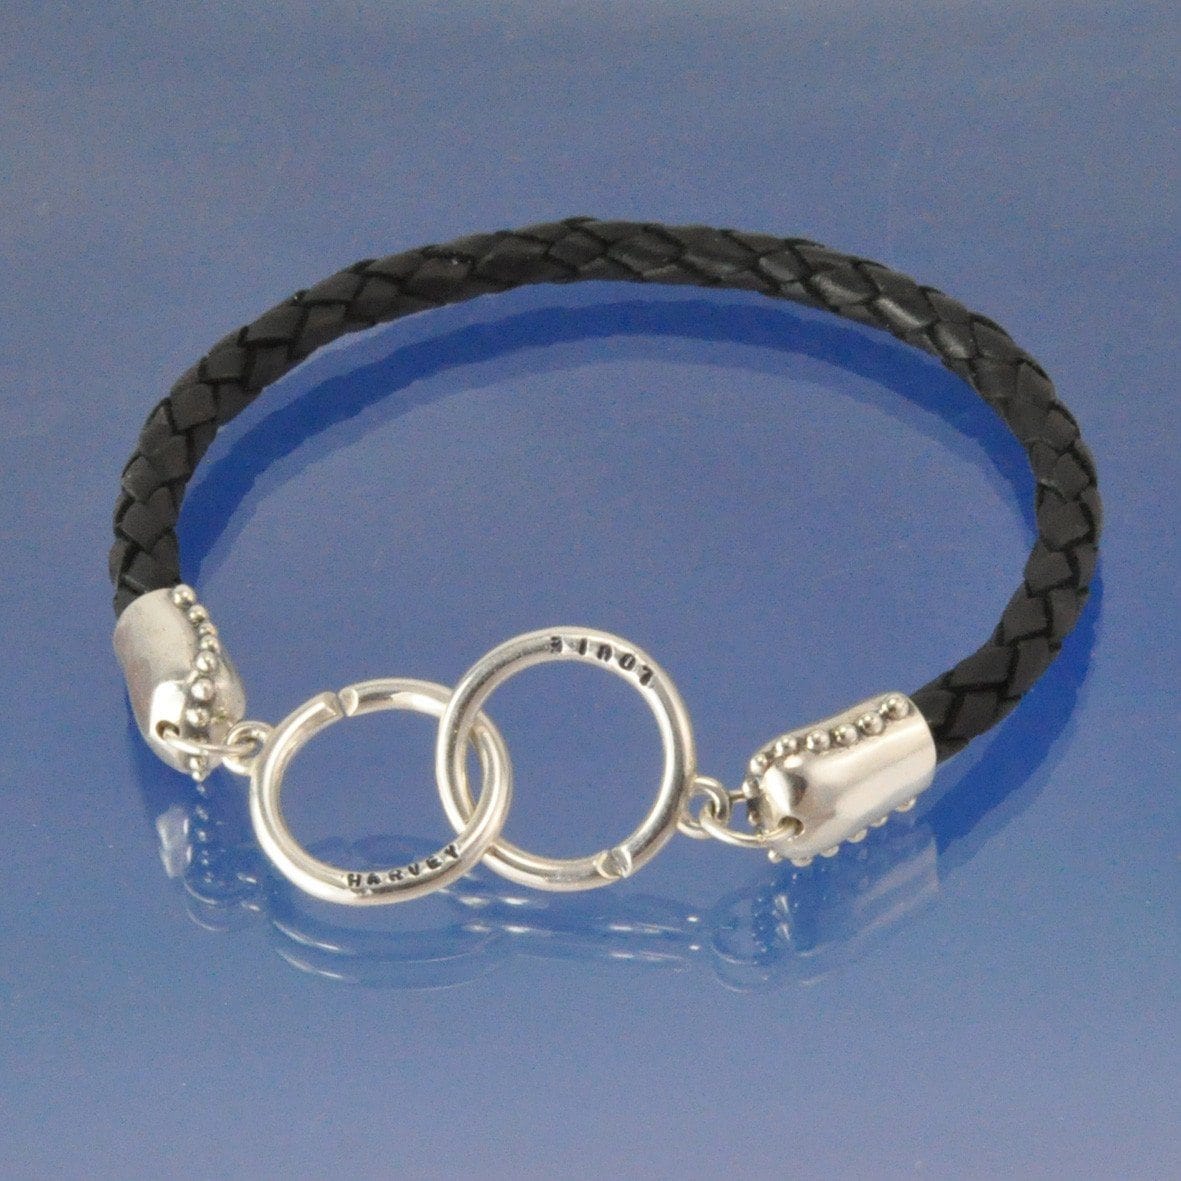 Personalised Leather Bracelet Bracelet by Chris Parry Jewellery